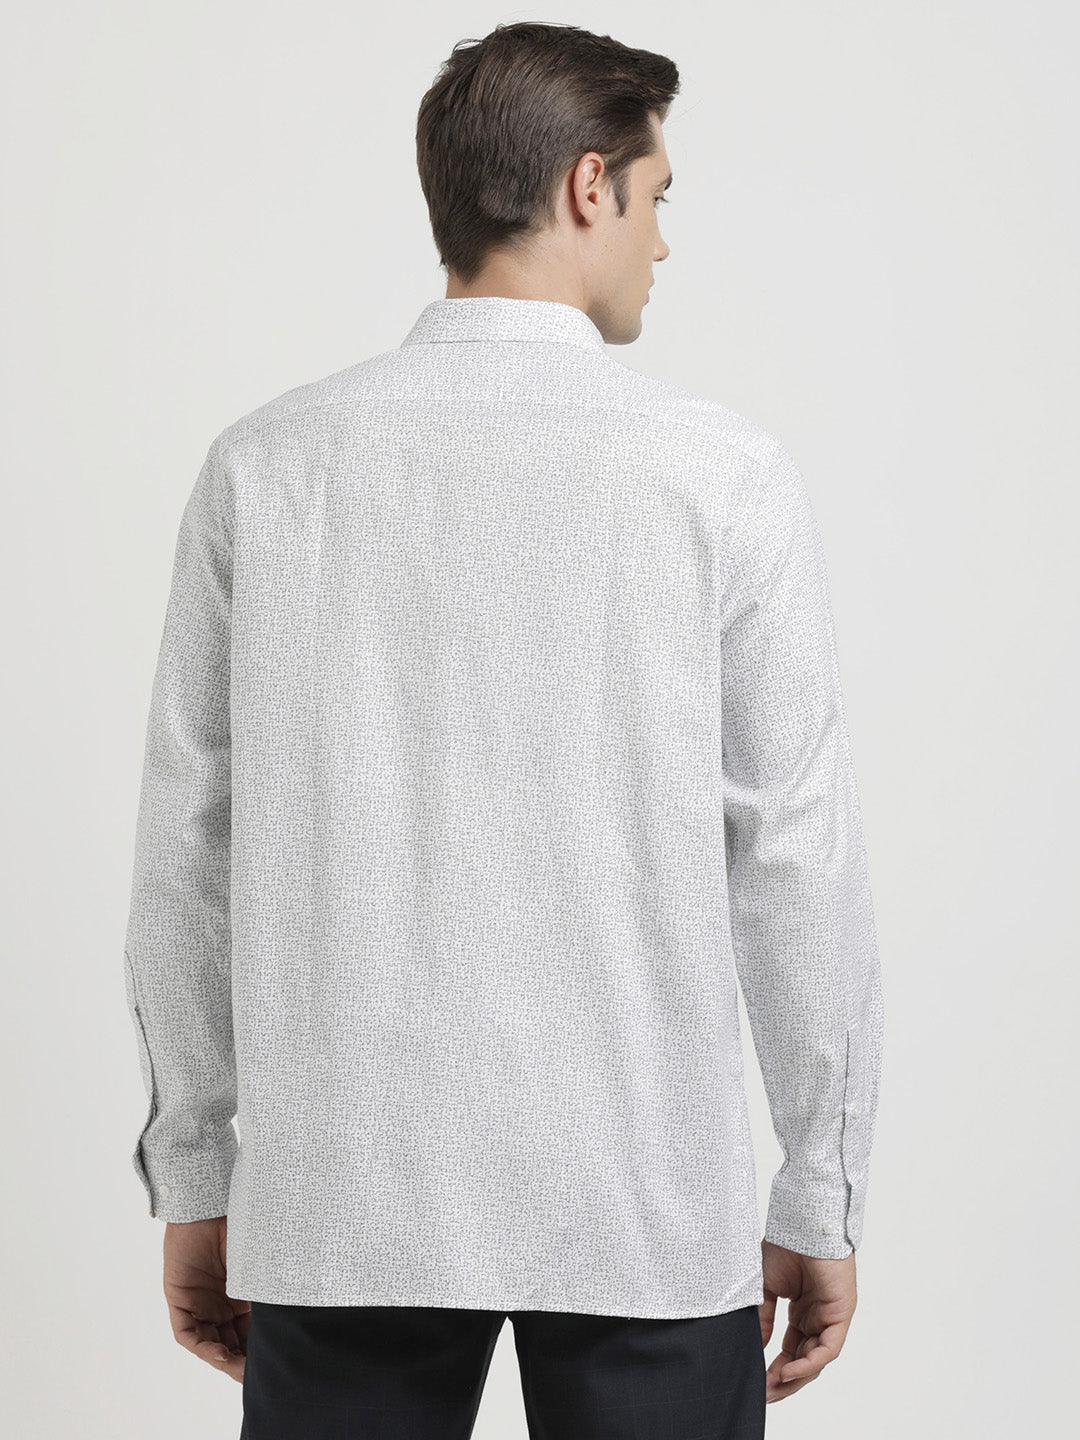 100% Cotton White Printed Regular Fit Full Sleeve Formal Shirt